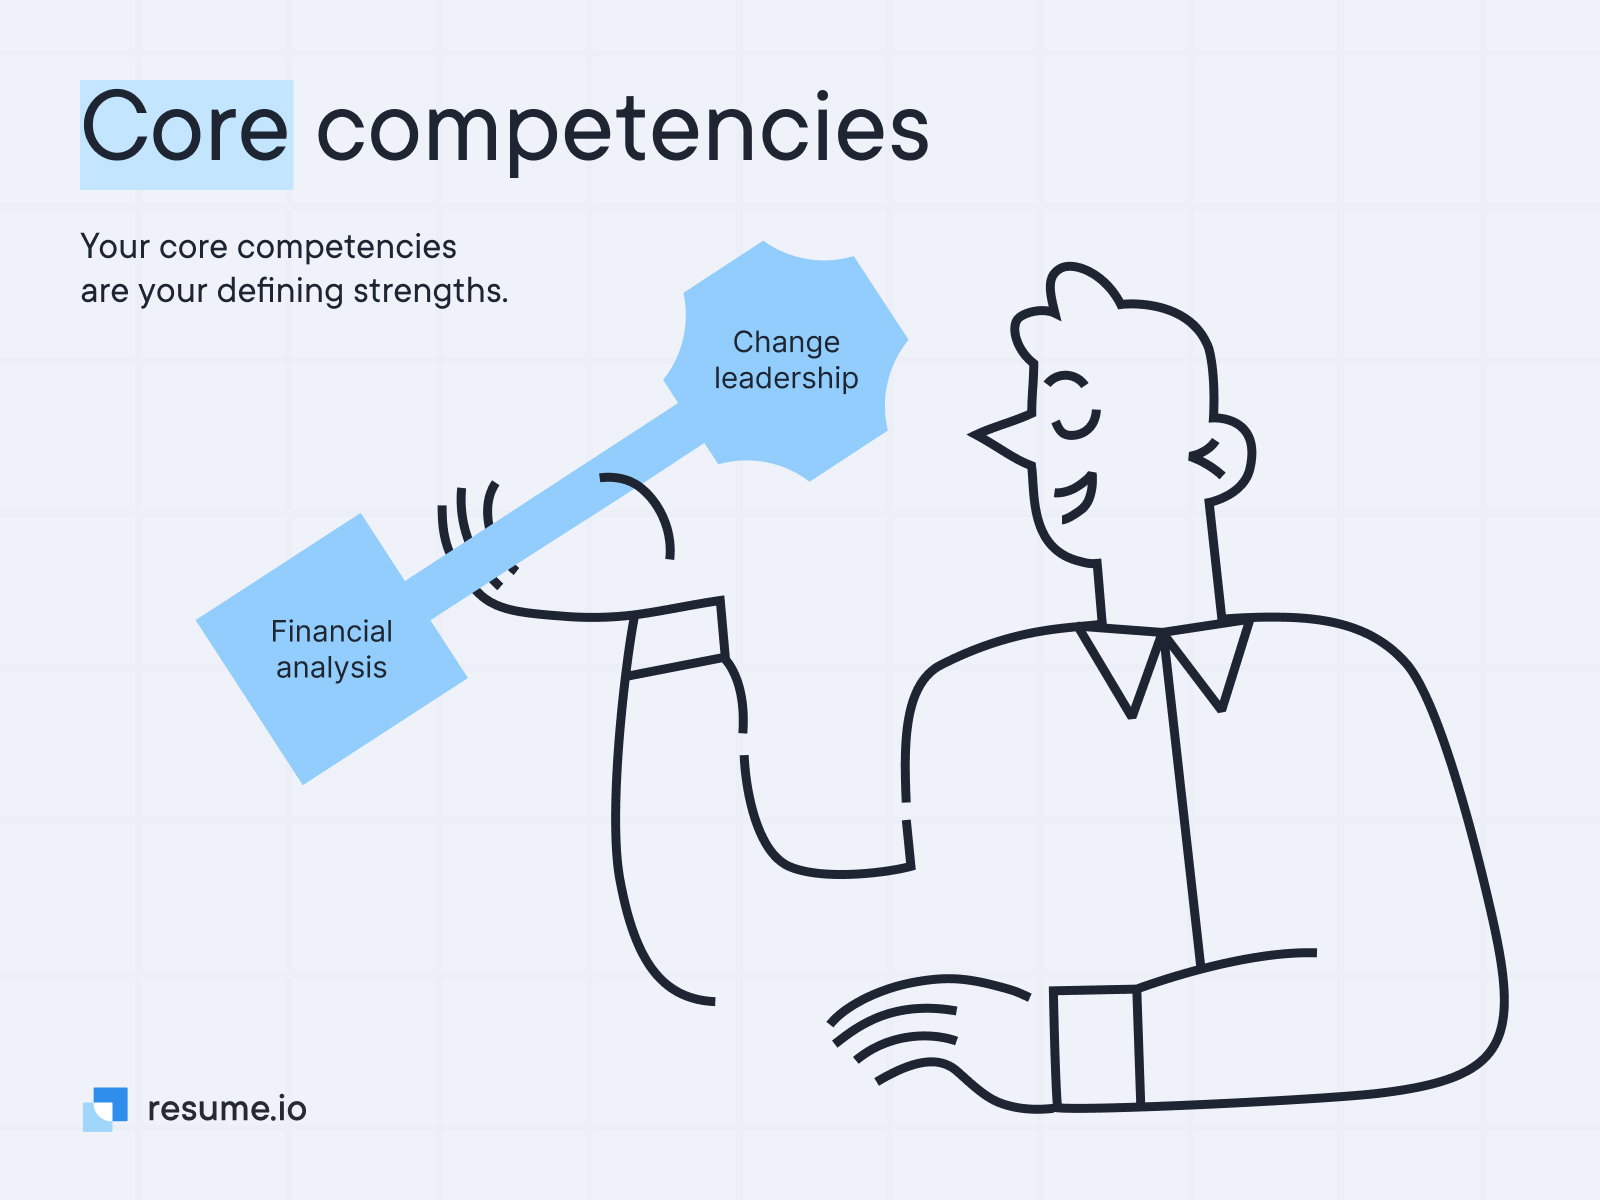 Core competencies